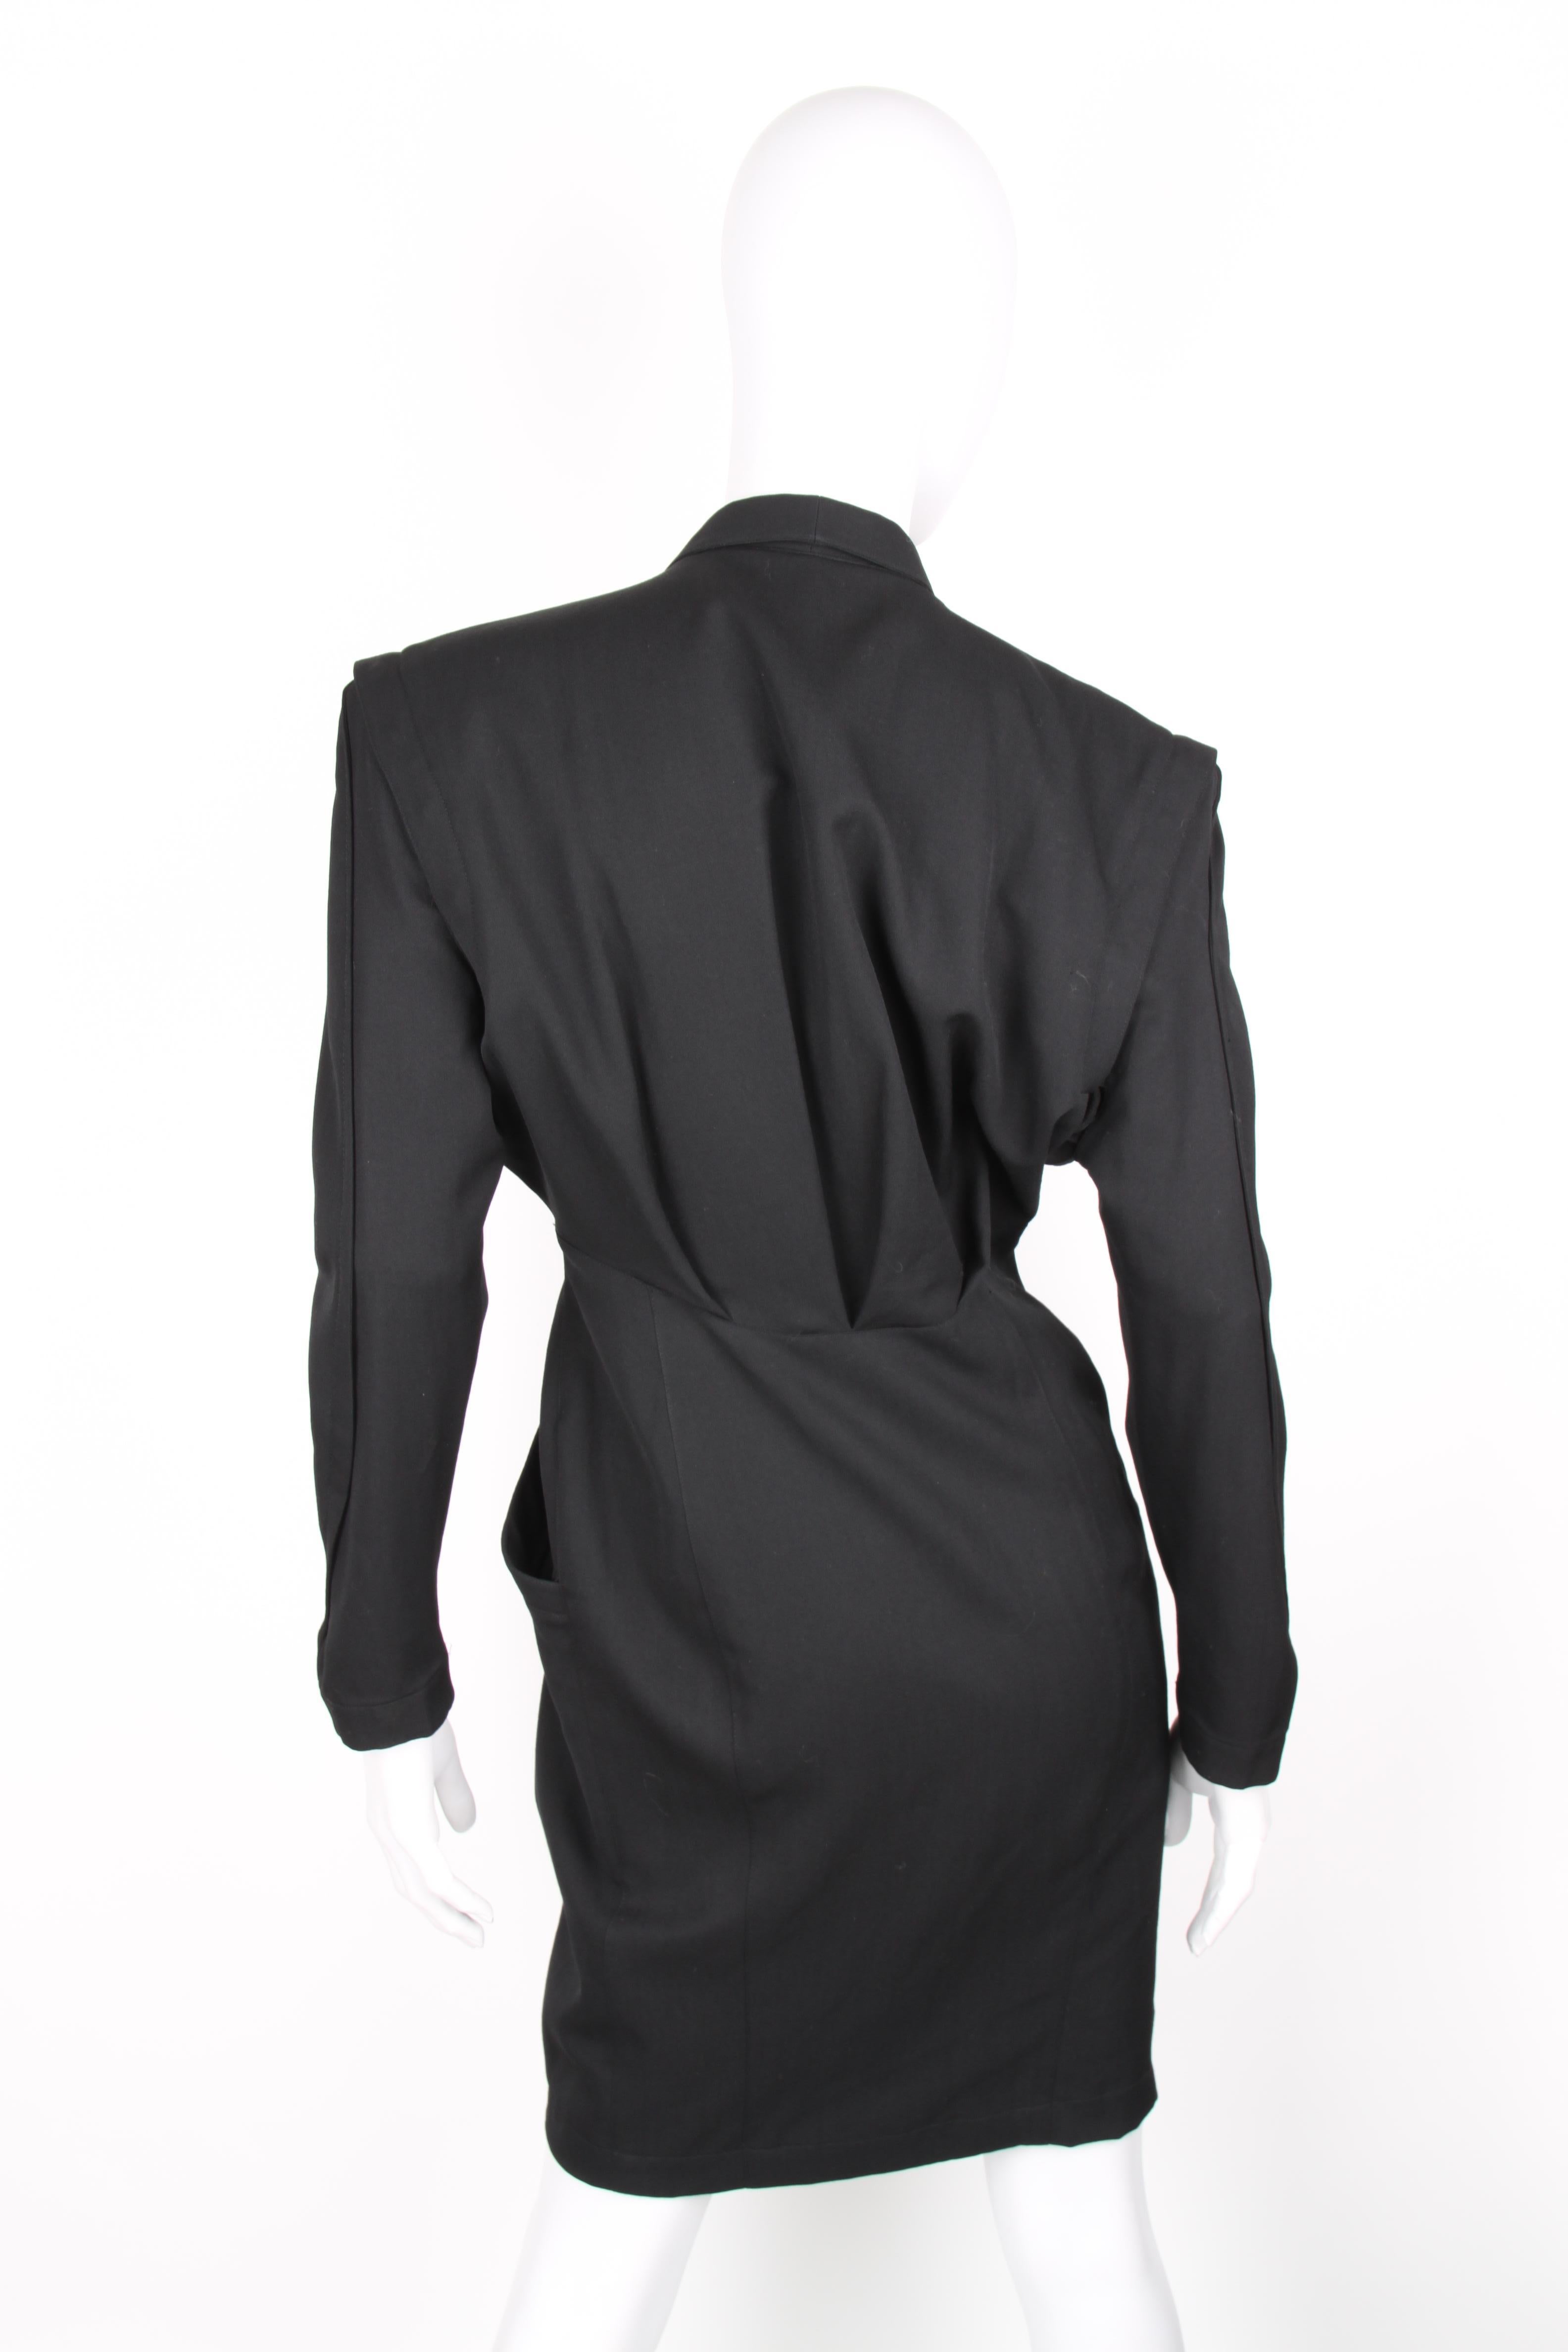 Thierry Mugler Black Knee Length Detachable Sleeves Dress For Sale 2